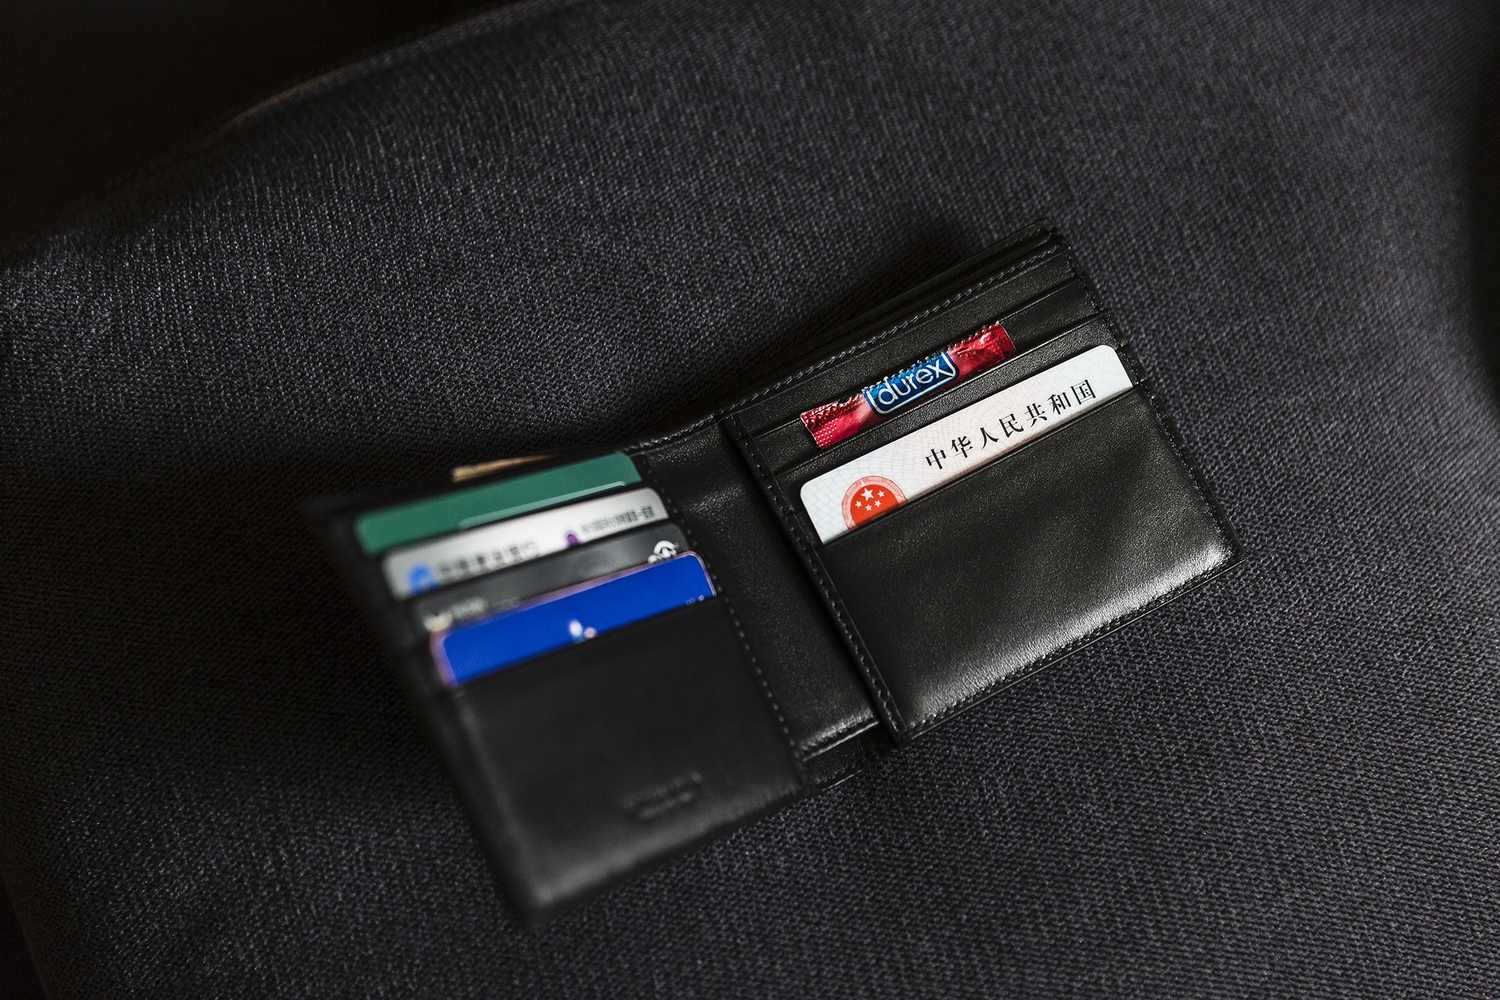 A PUA mentor’s wallet, May 17, 2015.